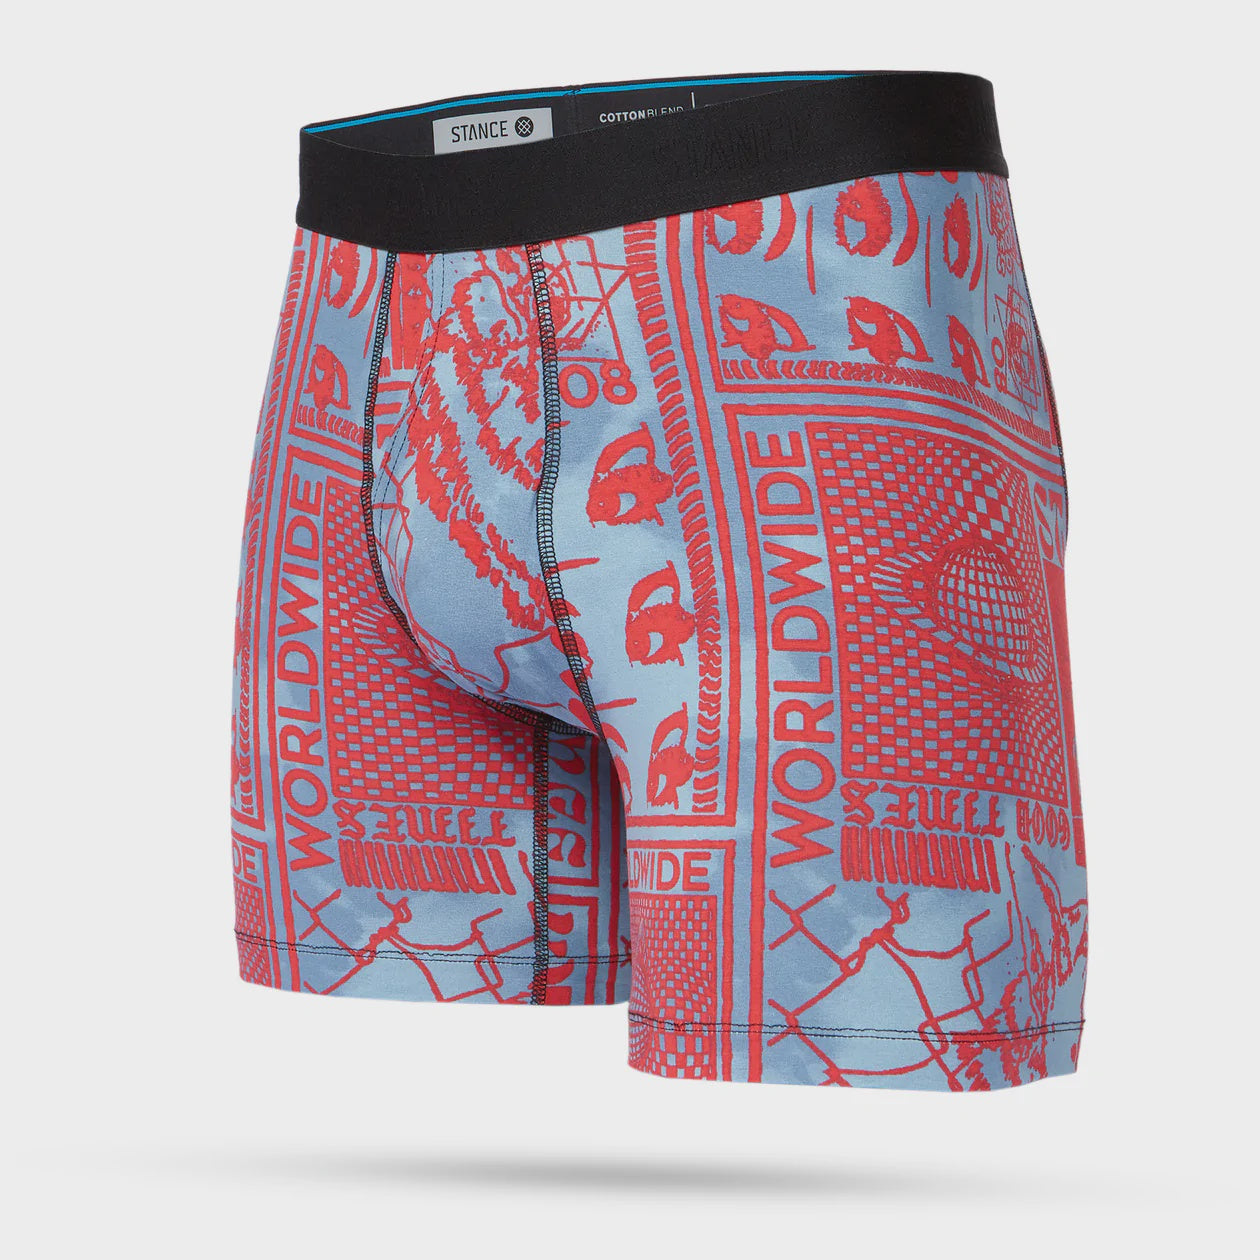 Greggs Men's Boxer Shorts, 2 Pack, Underwear, Sausage Rolls, multi :  : Fashion